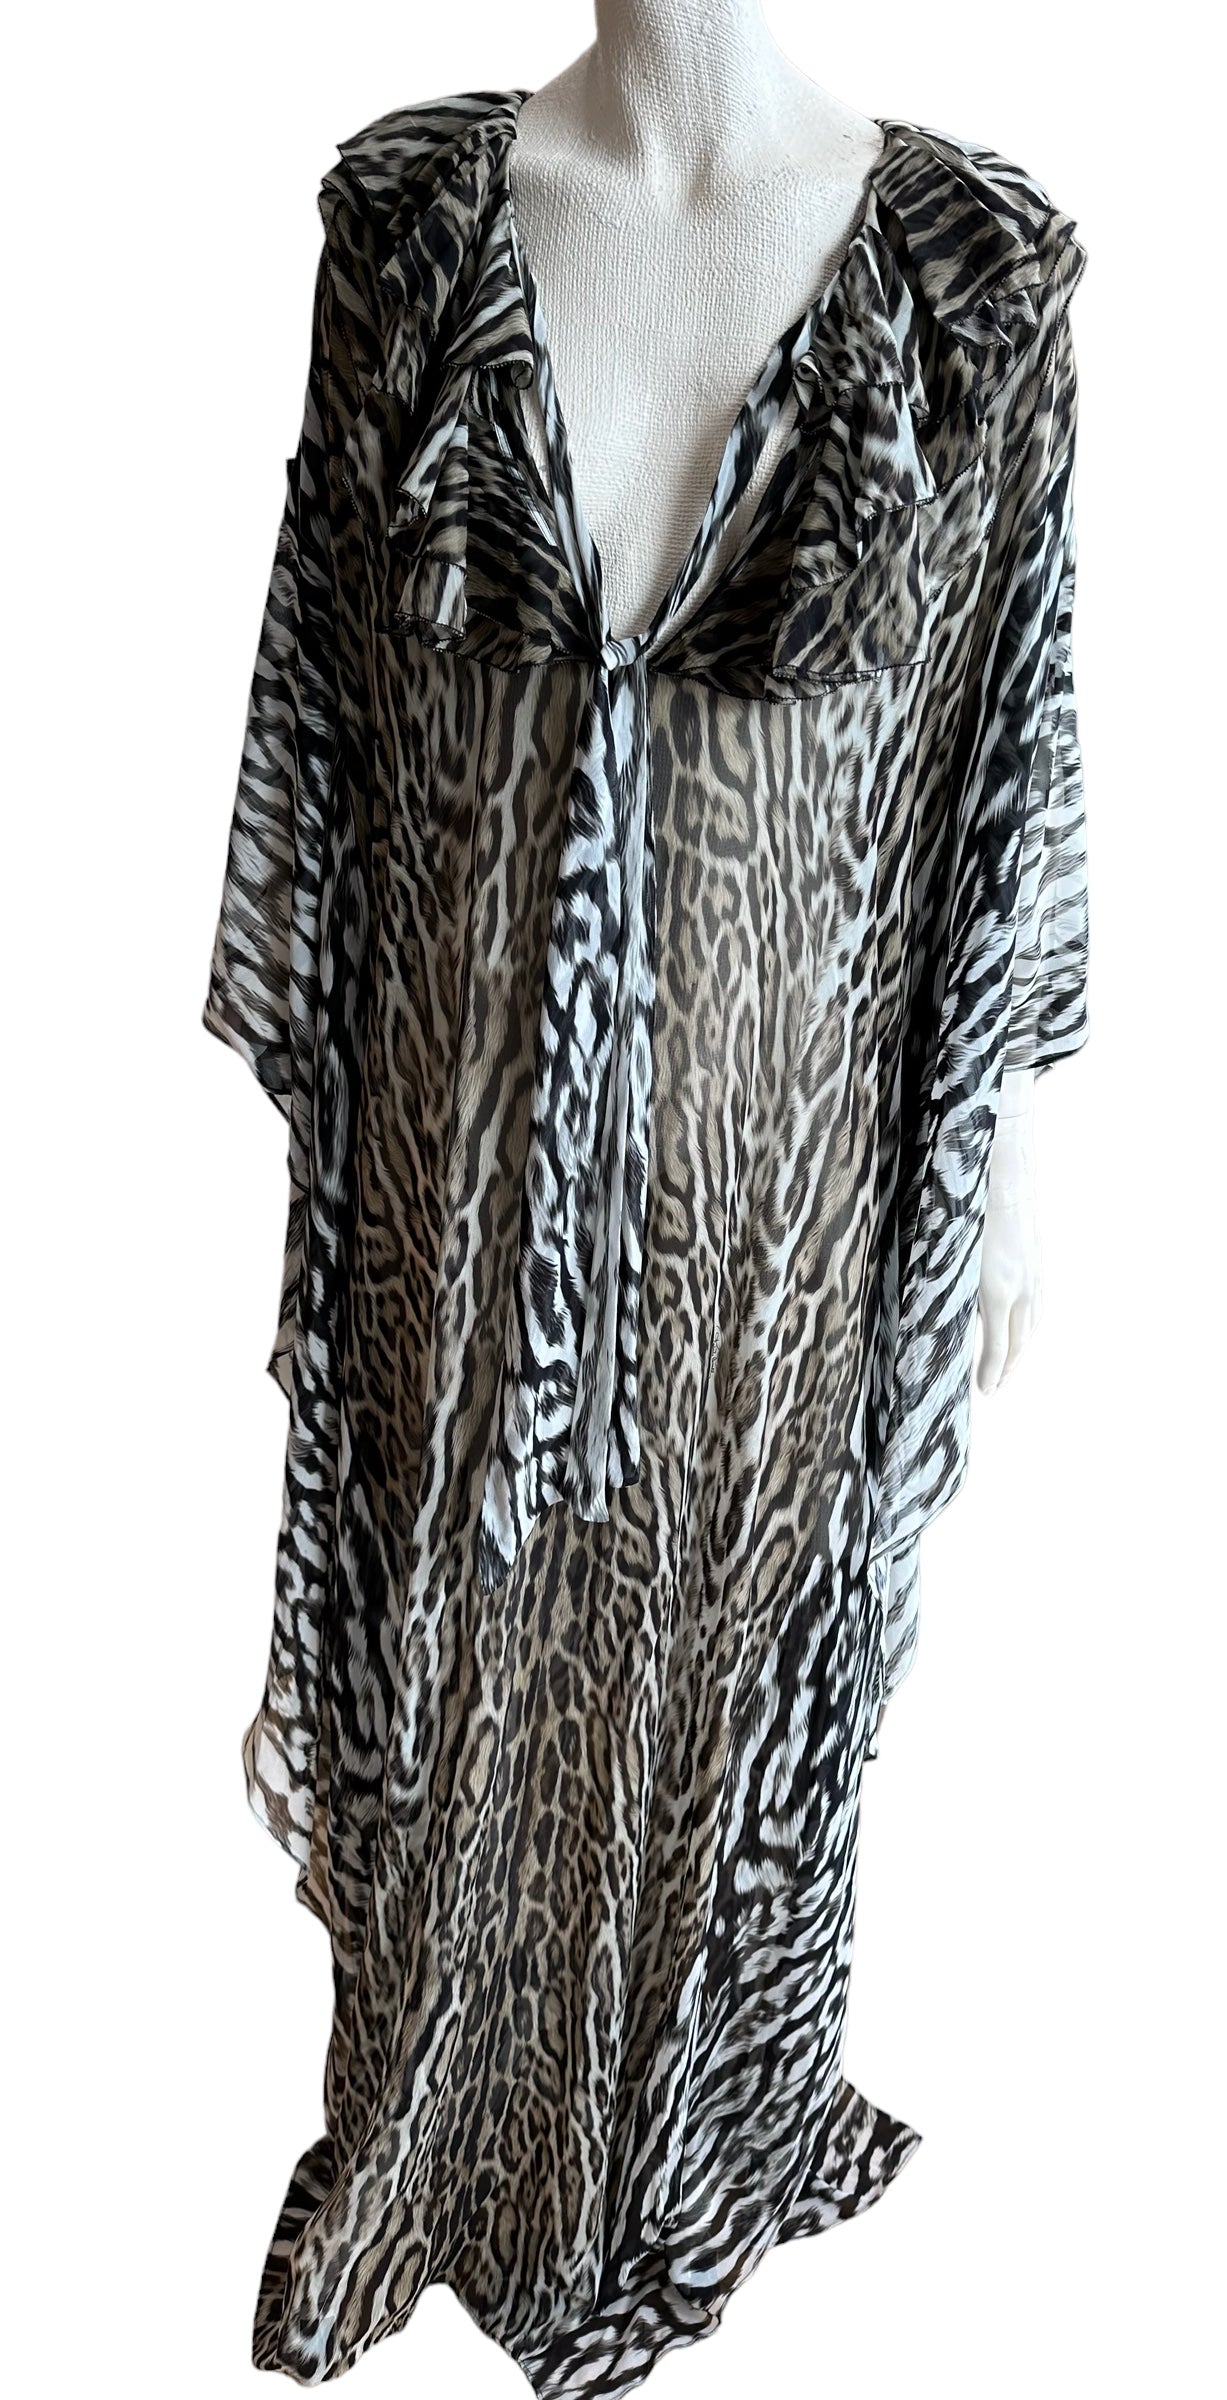 Roberto Cavalli animal print silk kaftan maxi dress NWT